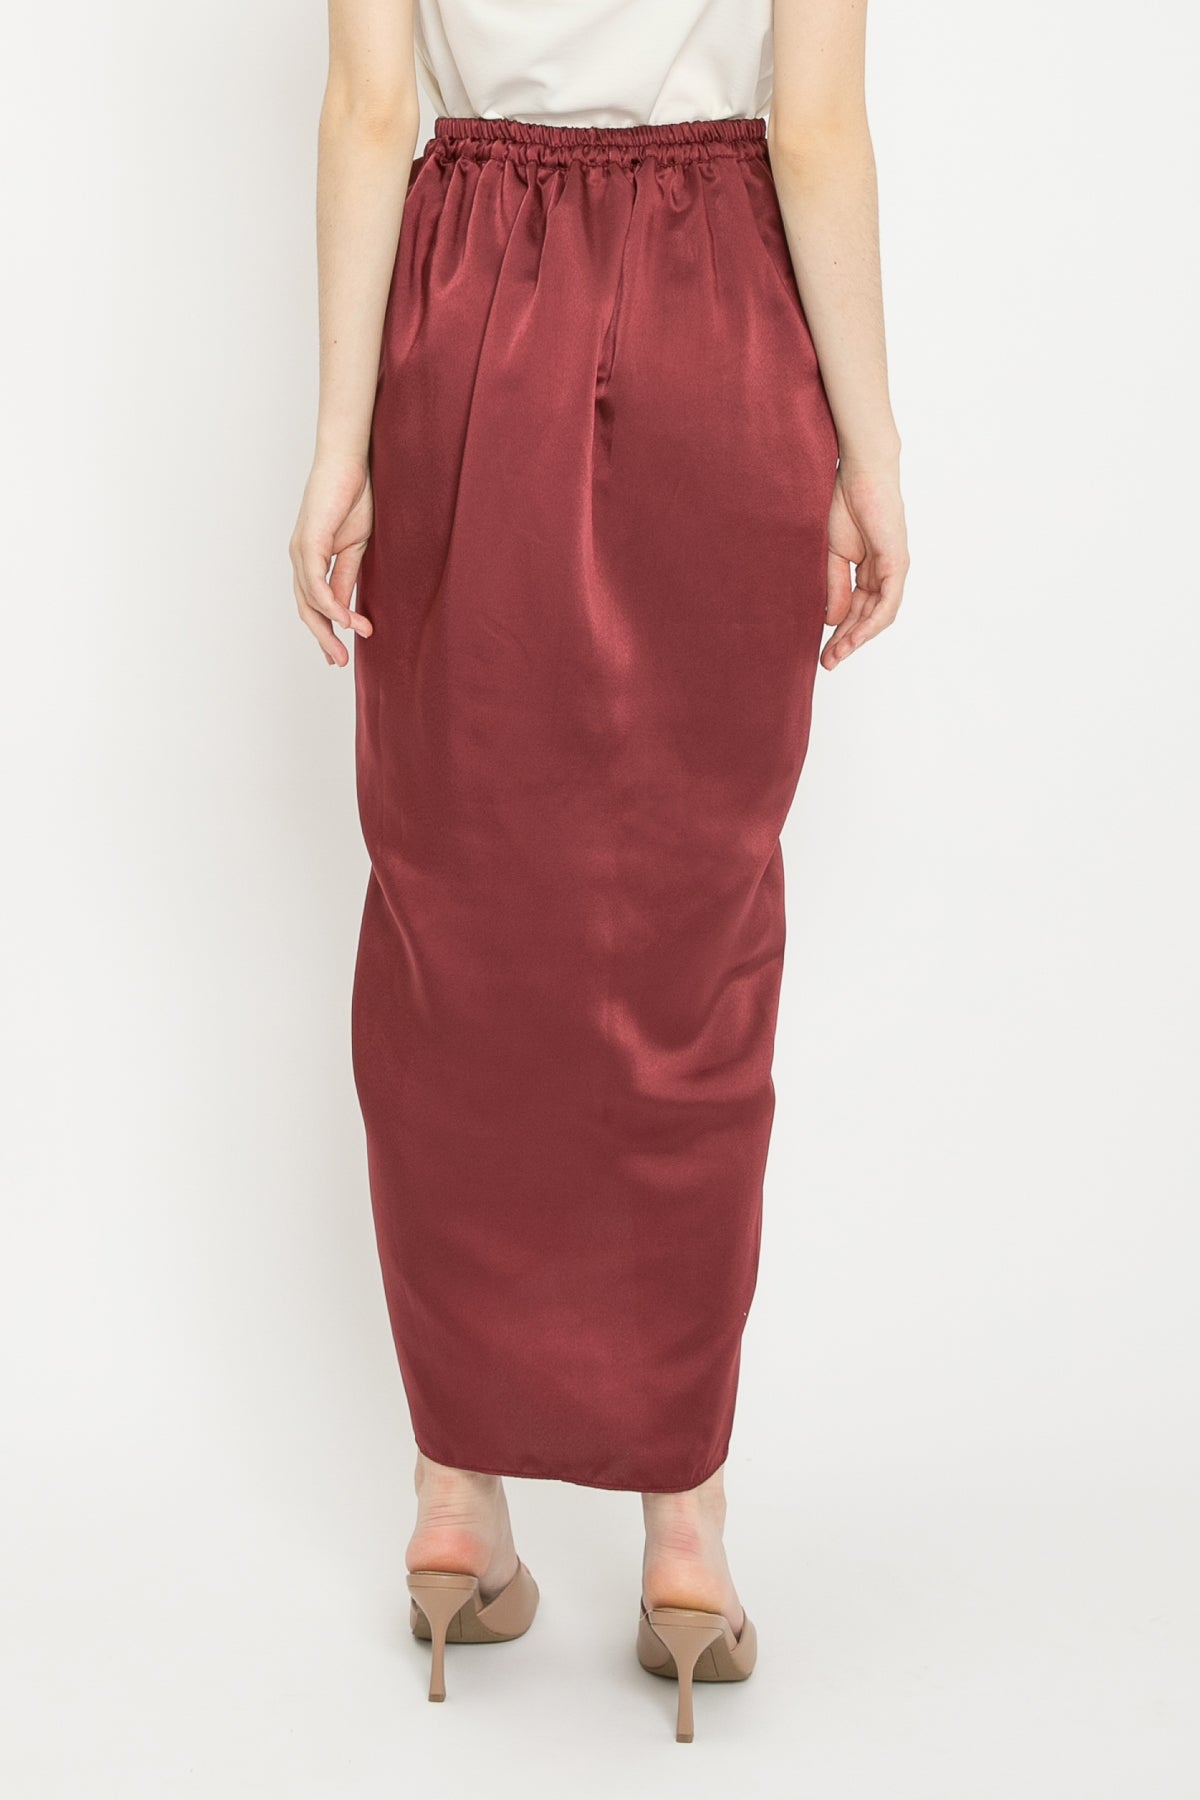 Hong Skirt in Deep Red